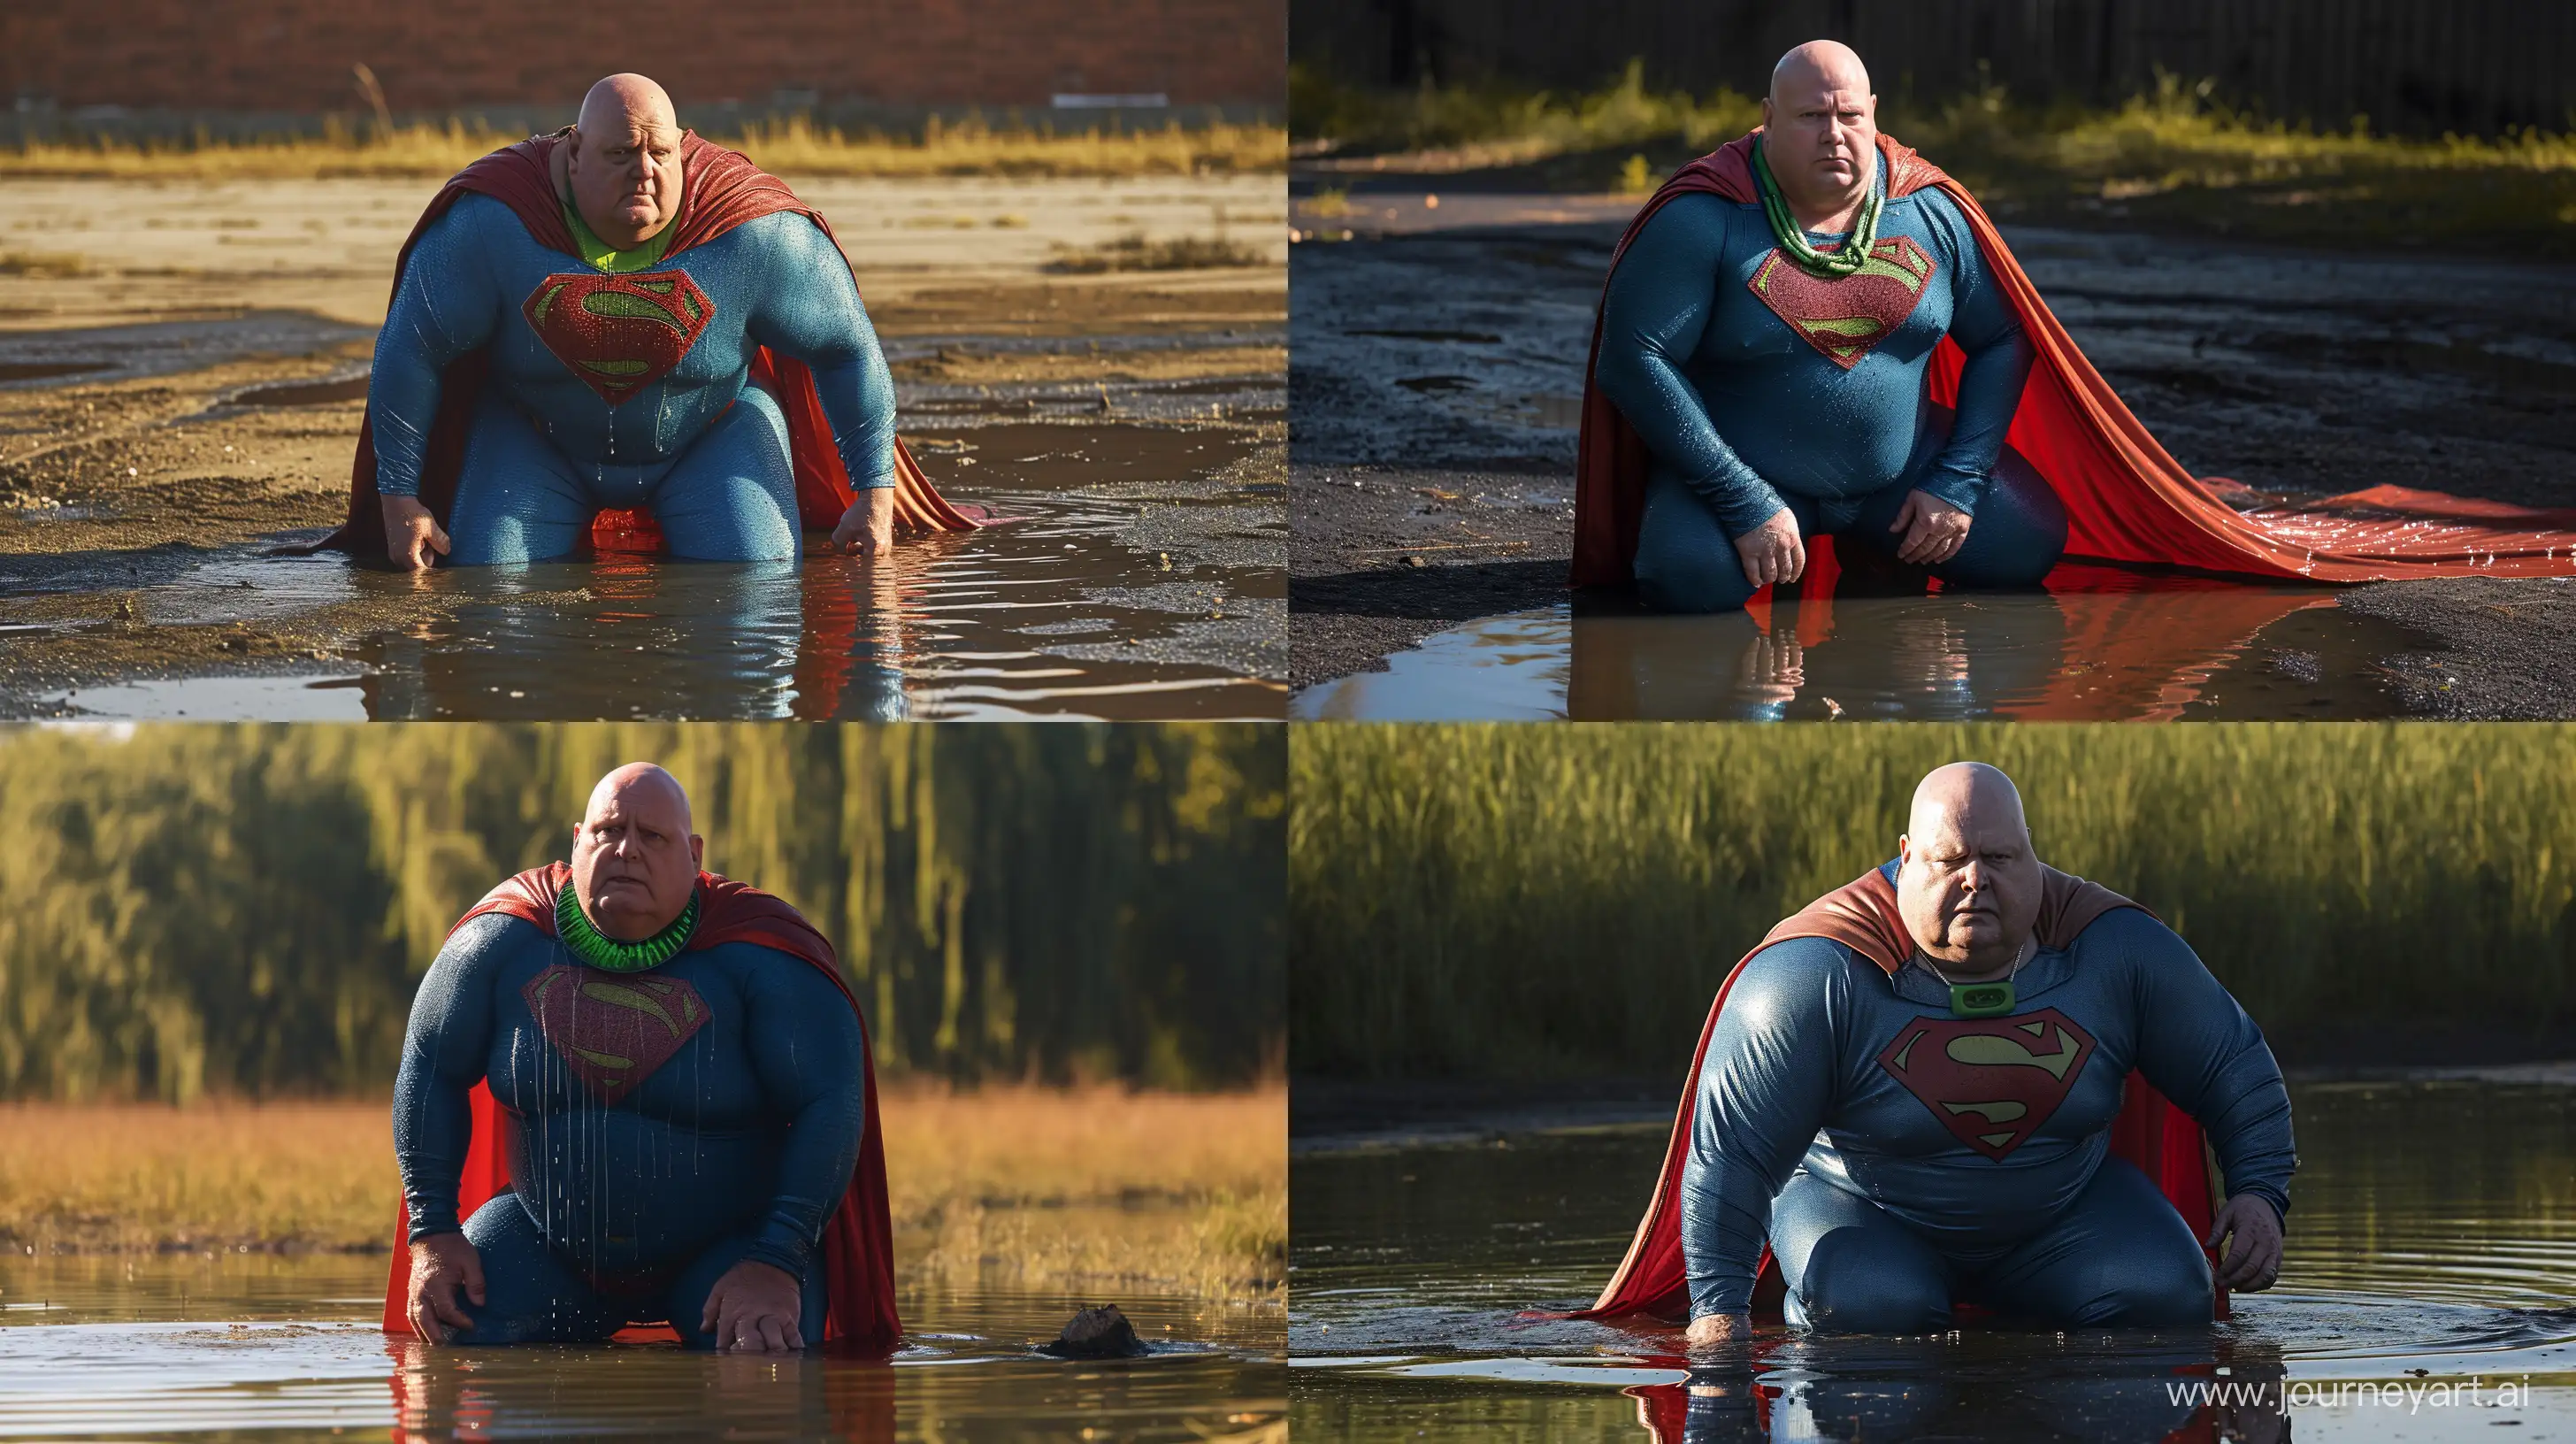 Elderly-Superman-Enjoys-Refreshing-Waterscape